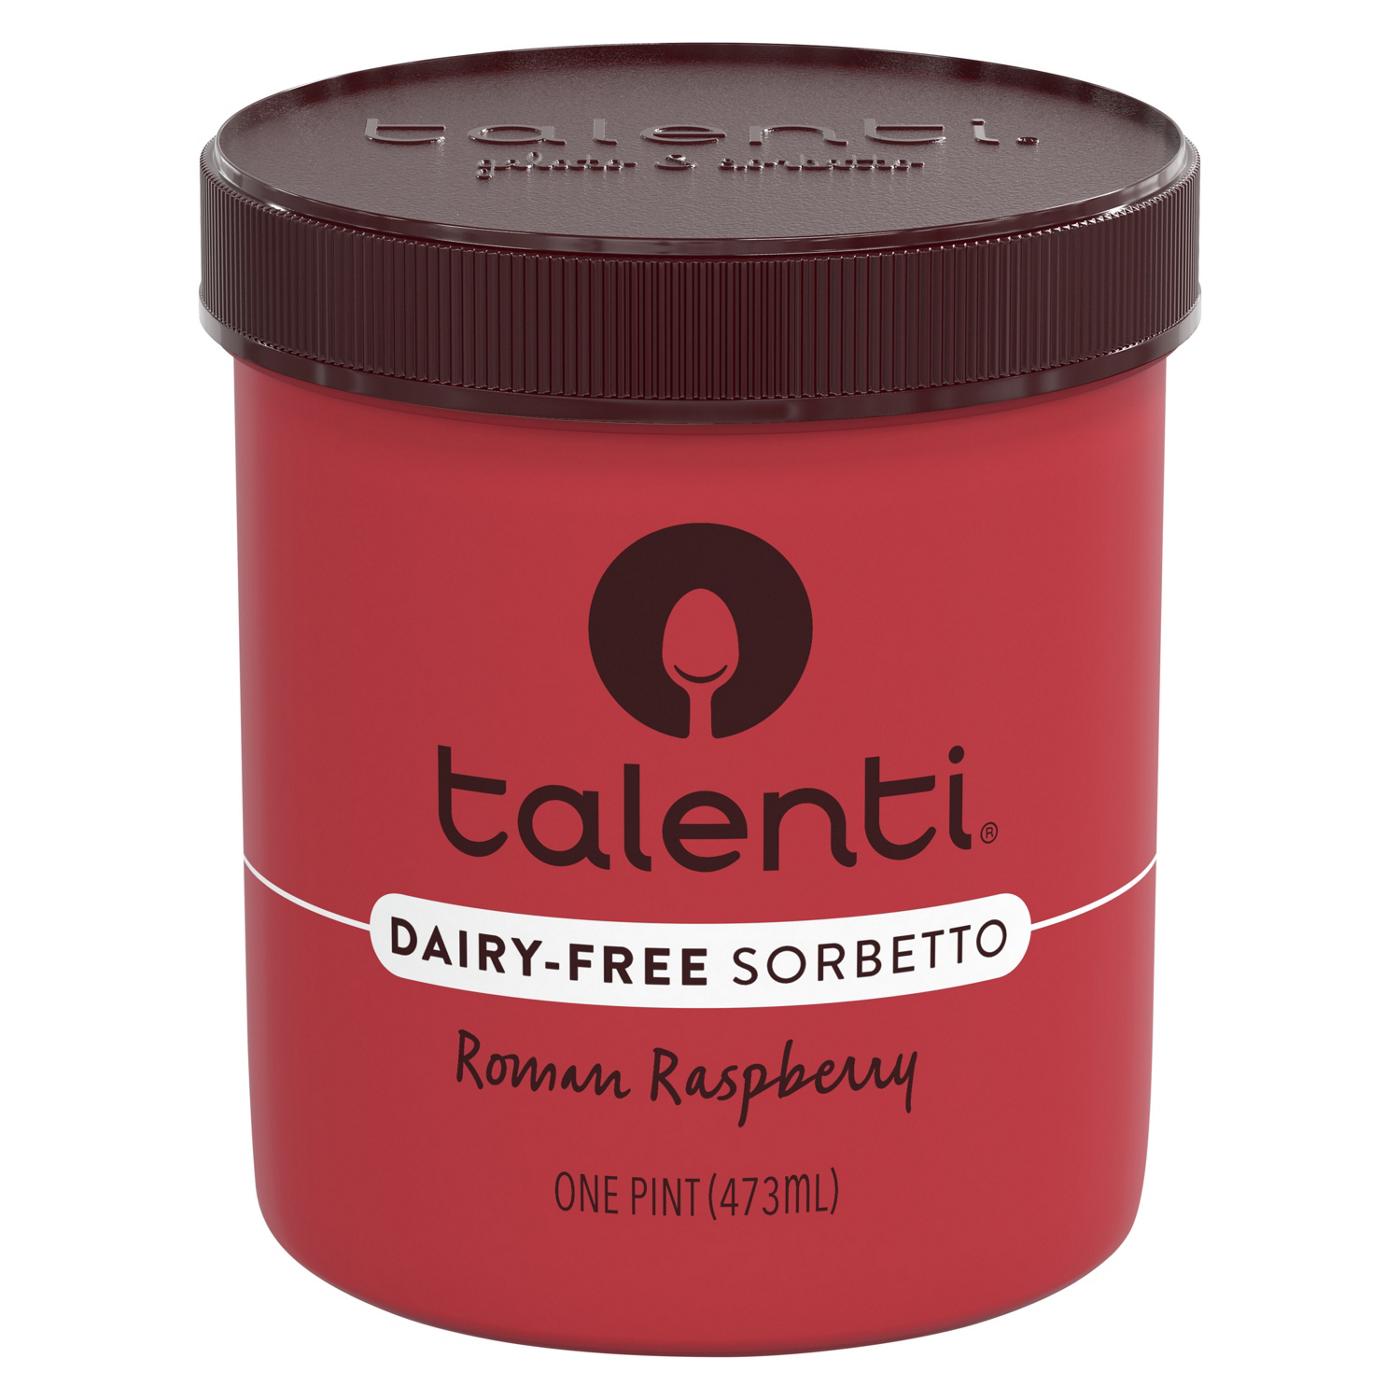 Talenti Roman Raspberry Dairy-Free Sorbetto; image 5 of 9